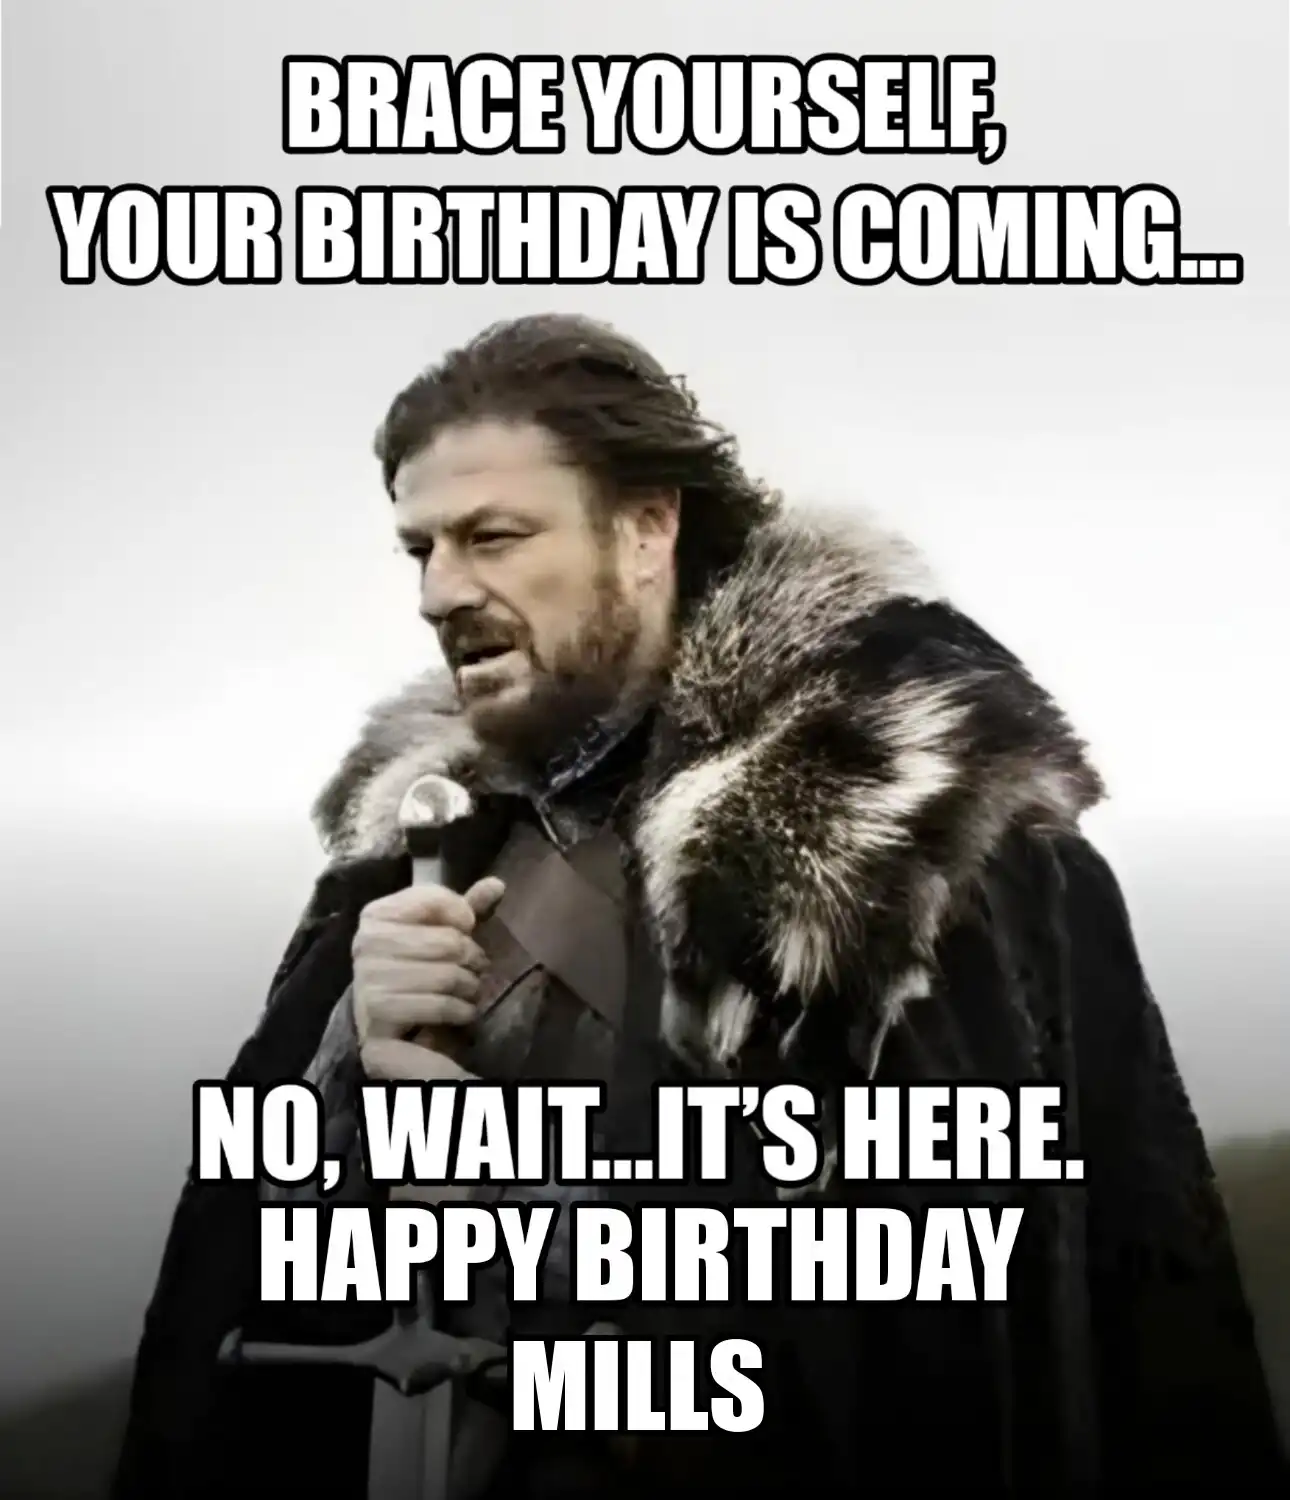 Happy Birthday Mills Brace Yourself Your Birthday Is Coming Meme